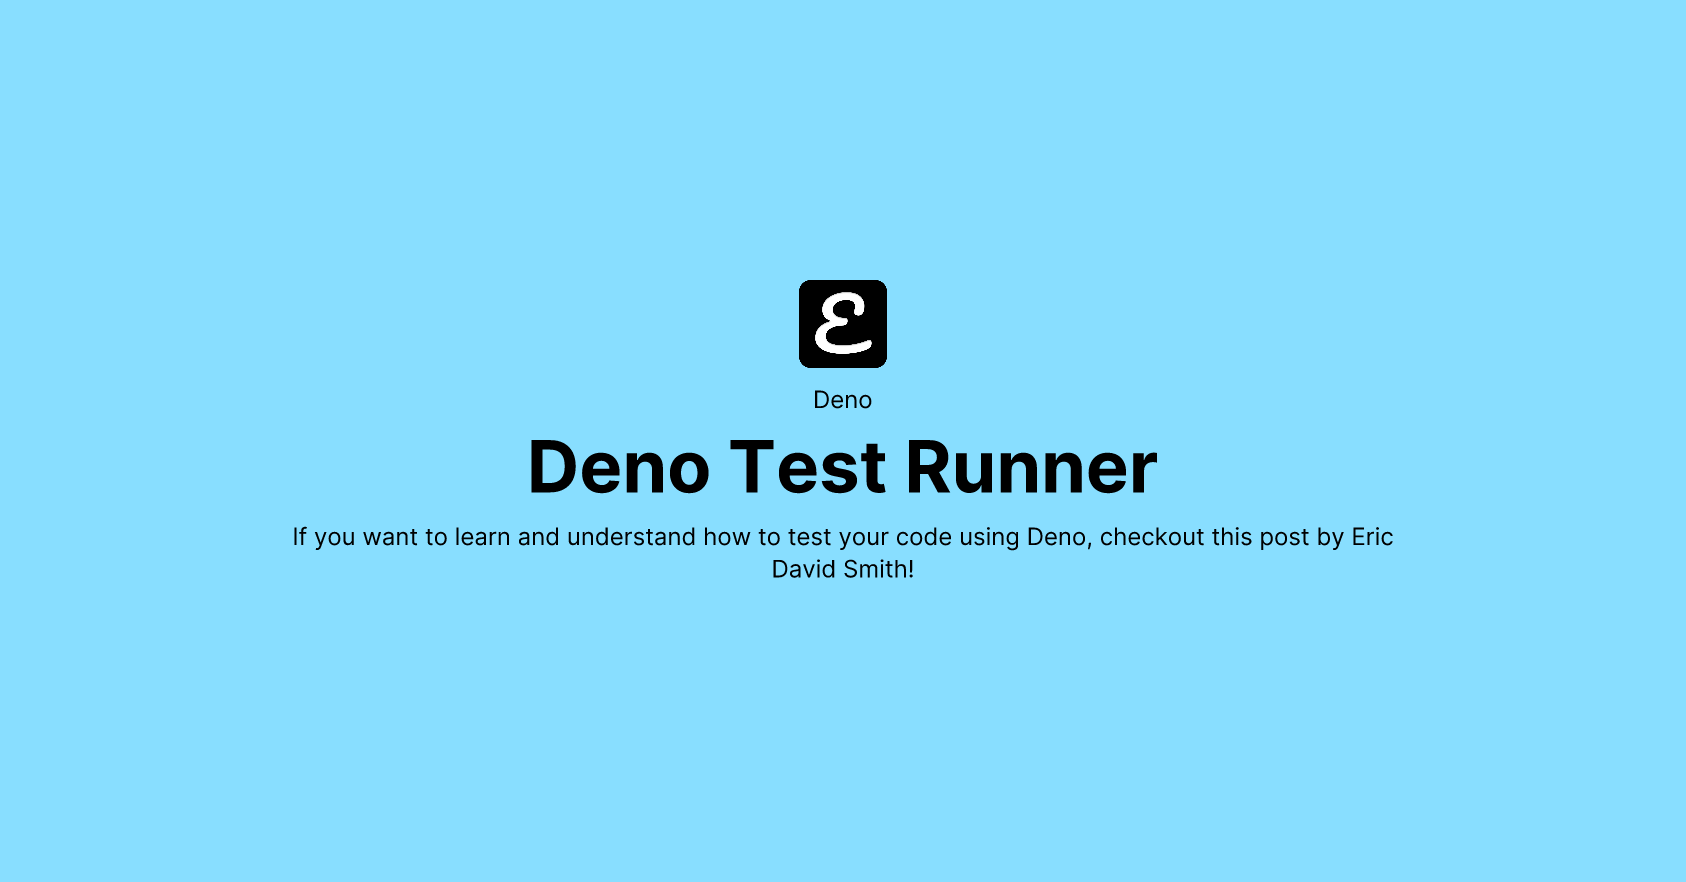 Deno Test Runner by Eric David Smith